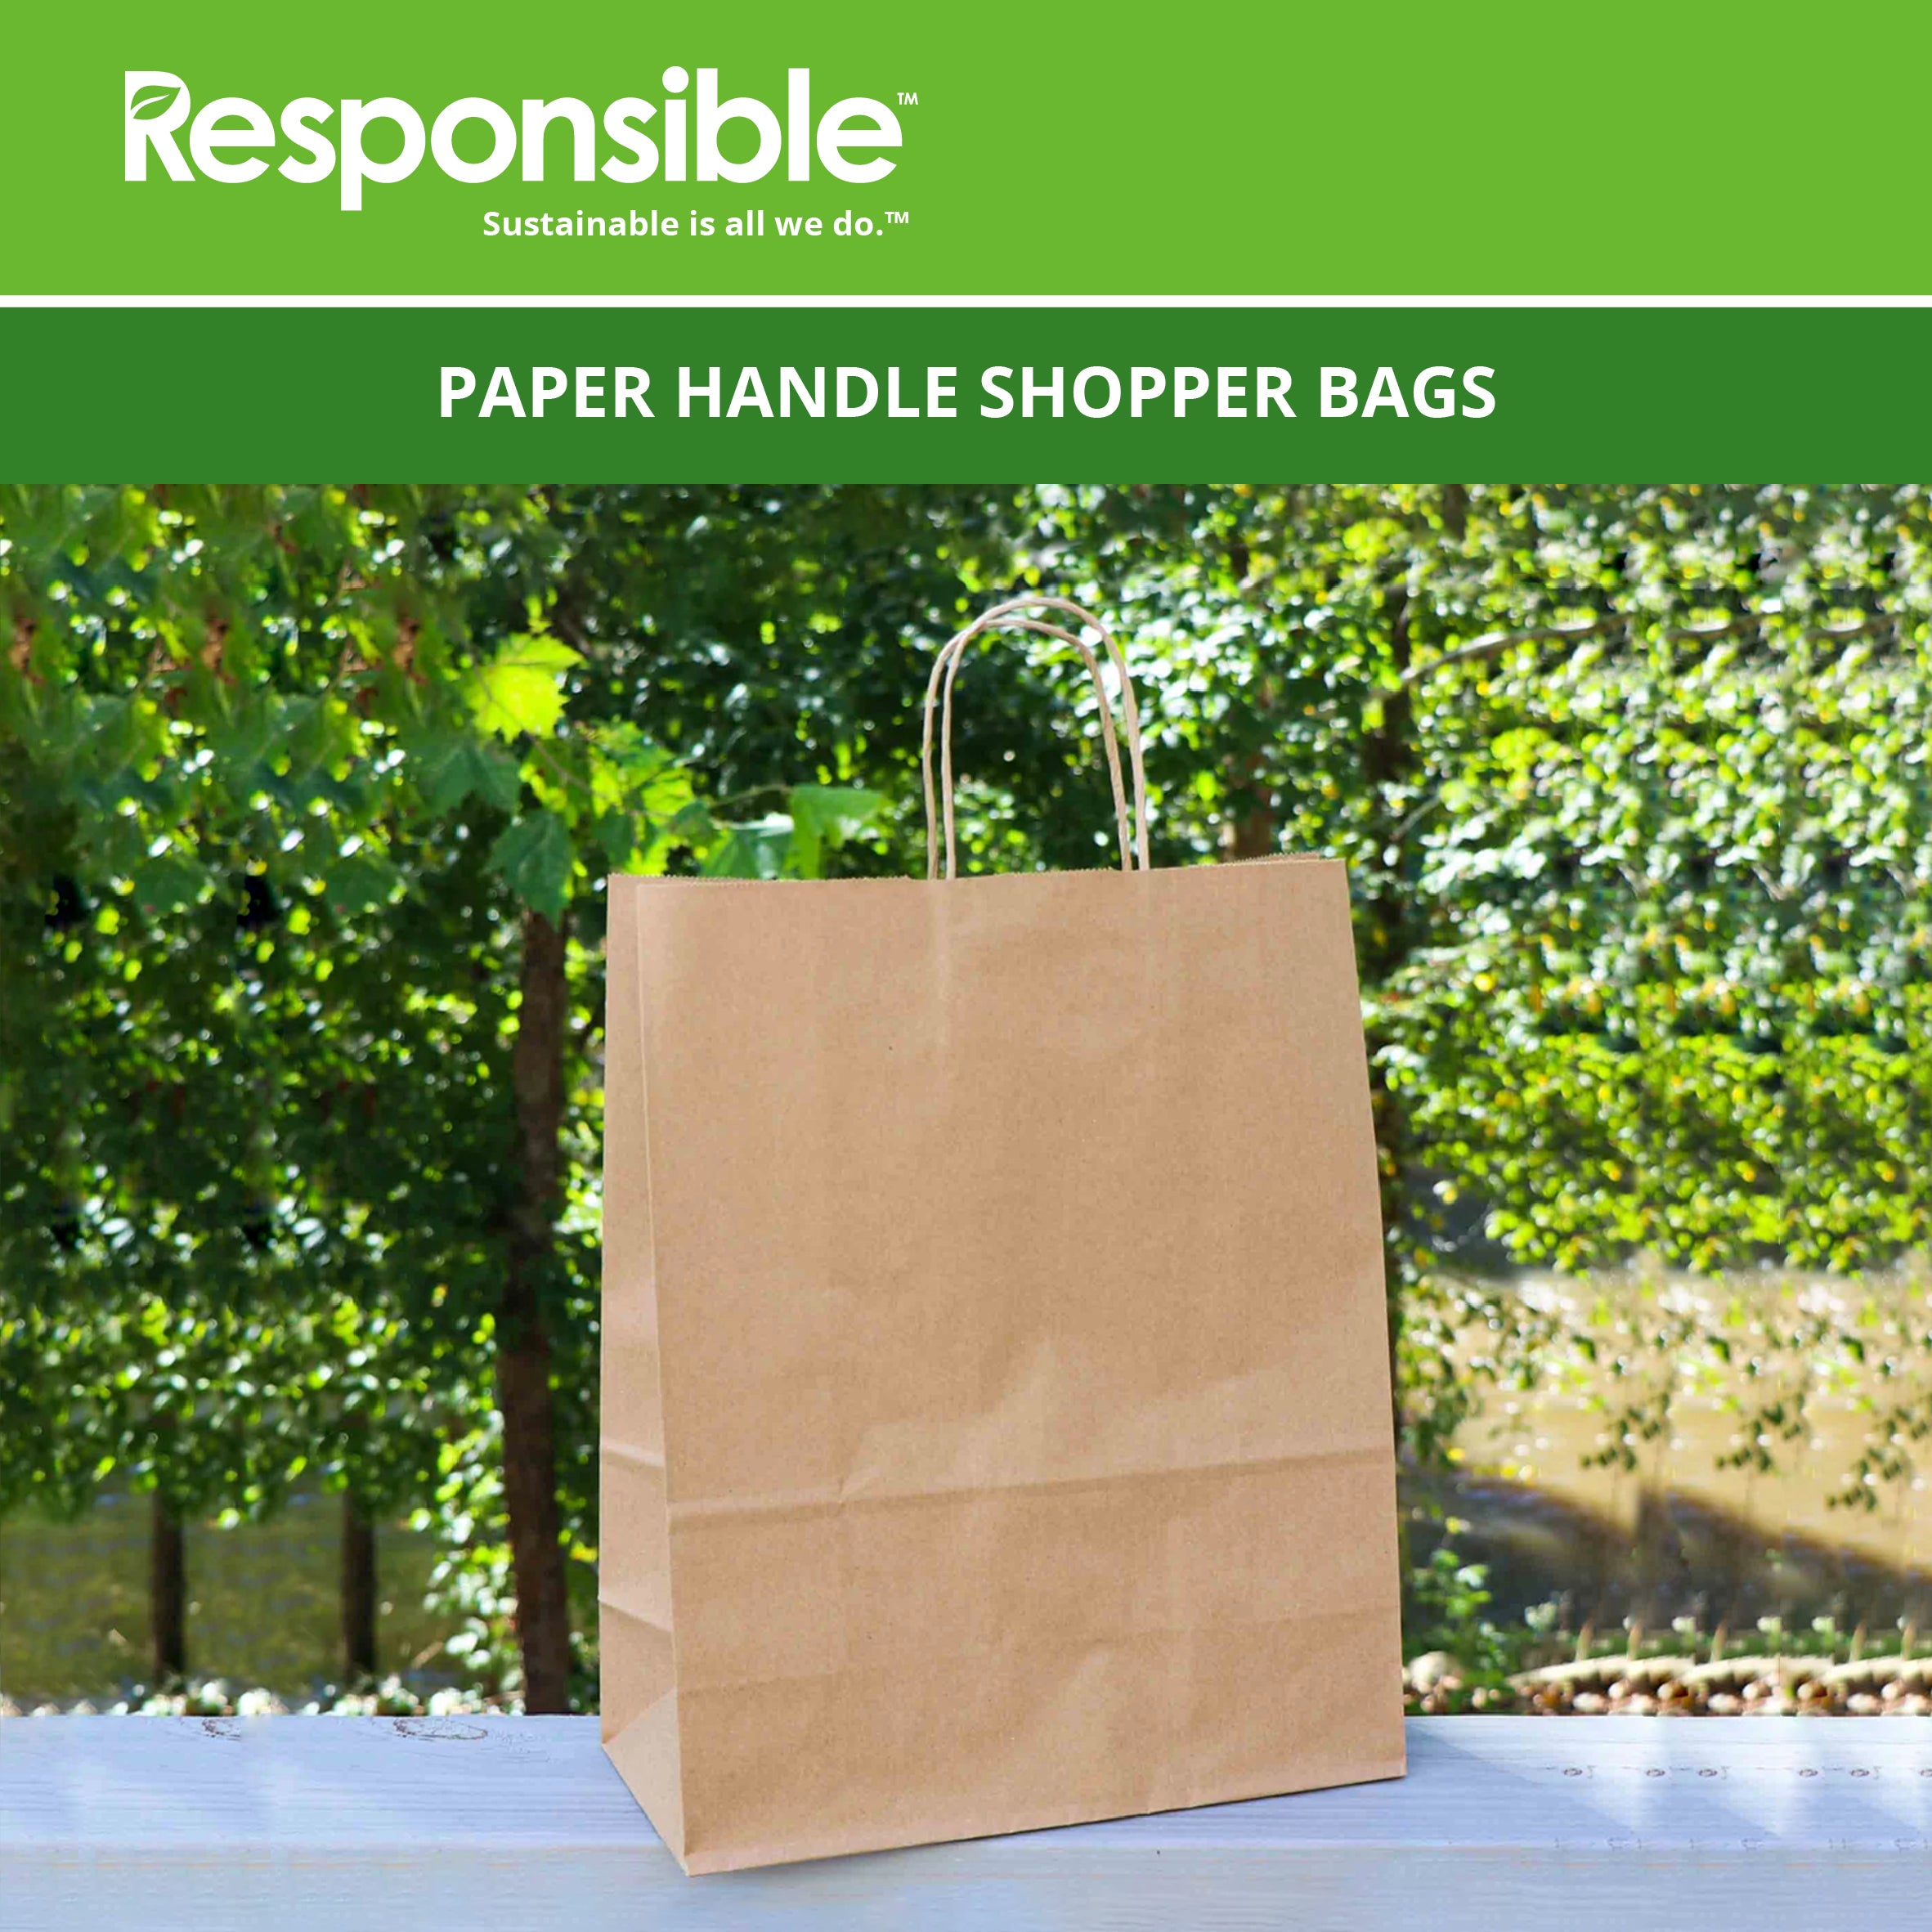 13 x 7 x 13 inch Paper Handle Shopping Bag